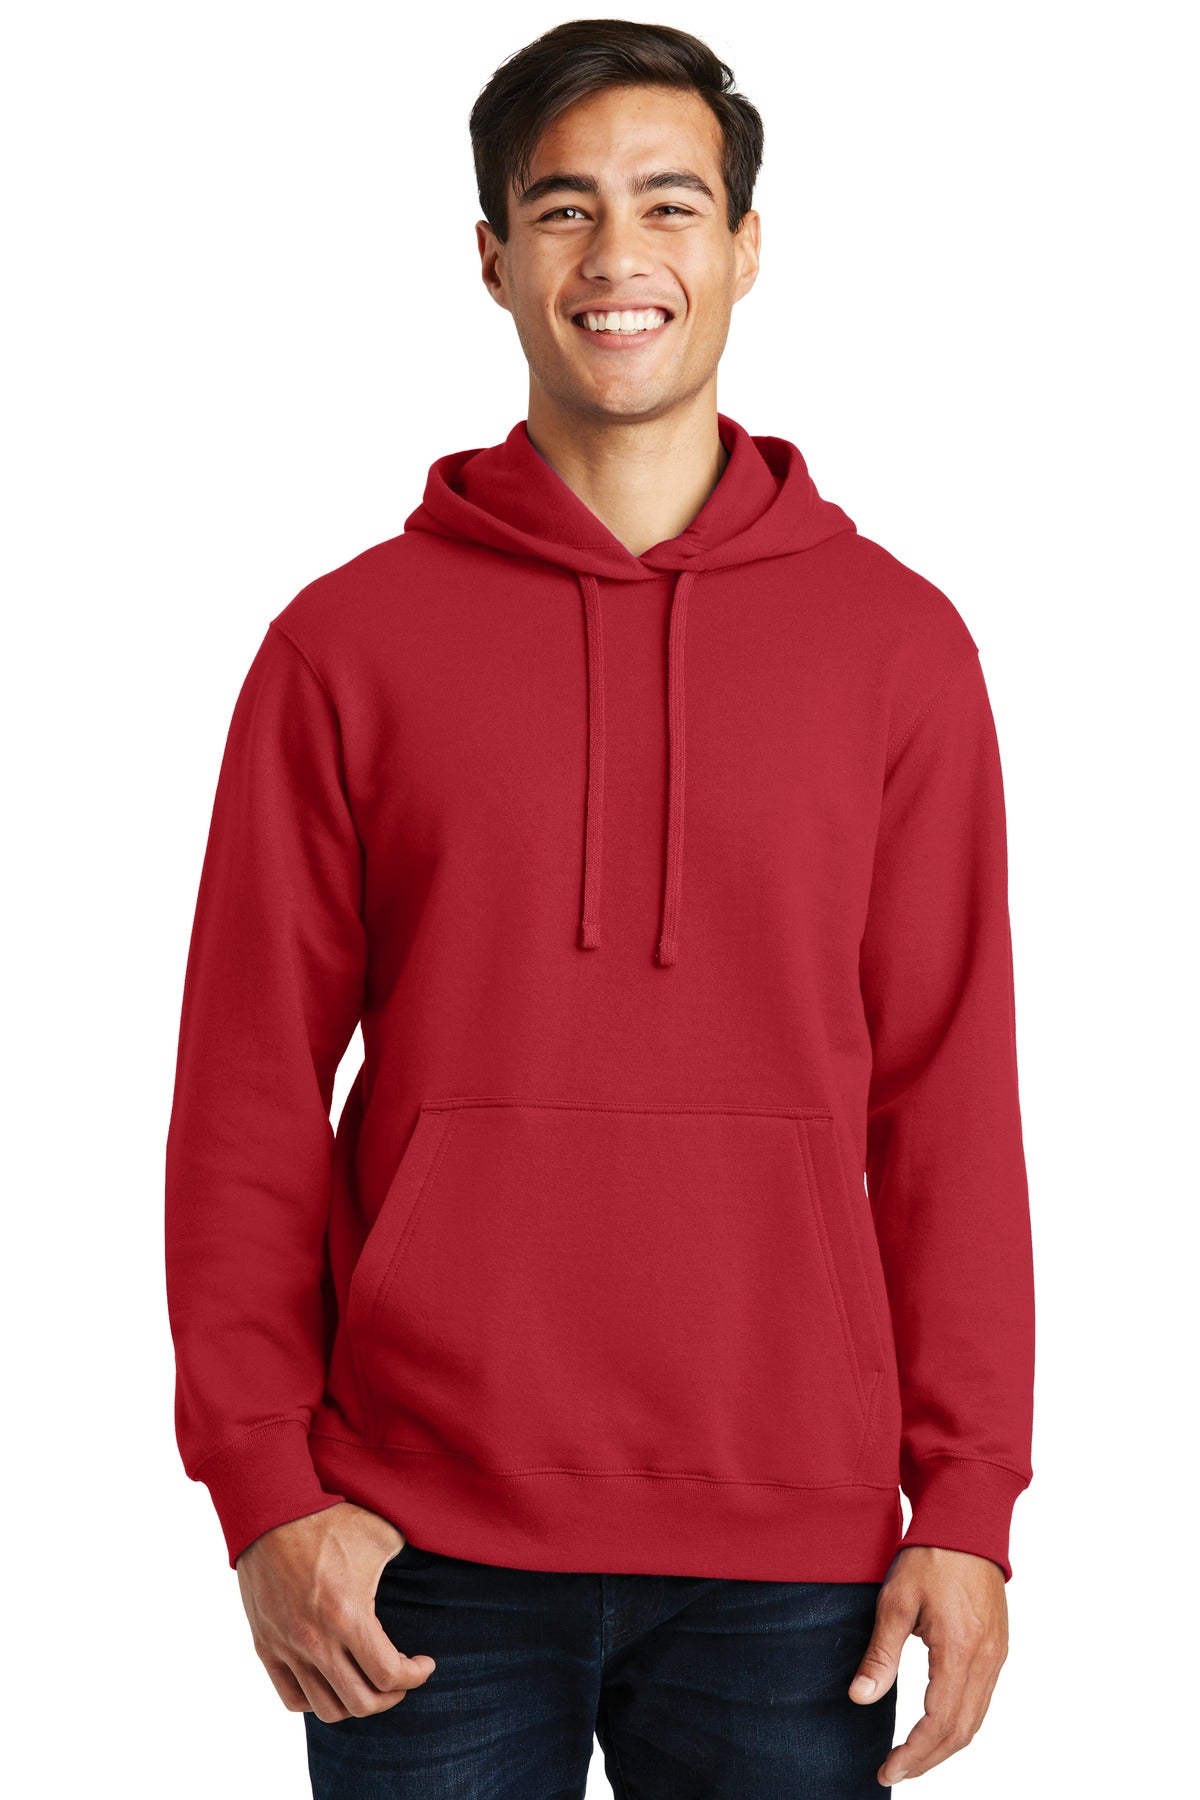 Photo of Port & Company Sweatshirts/Fleece PC850H  color  Team Cardinal